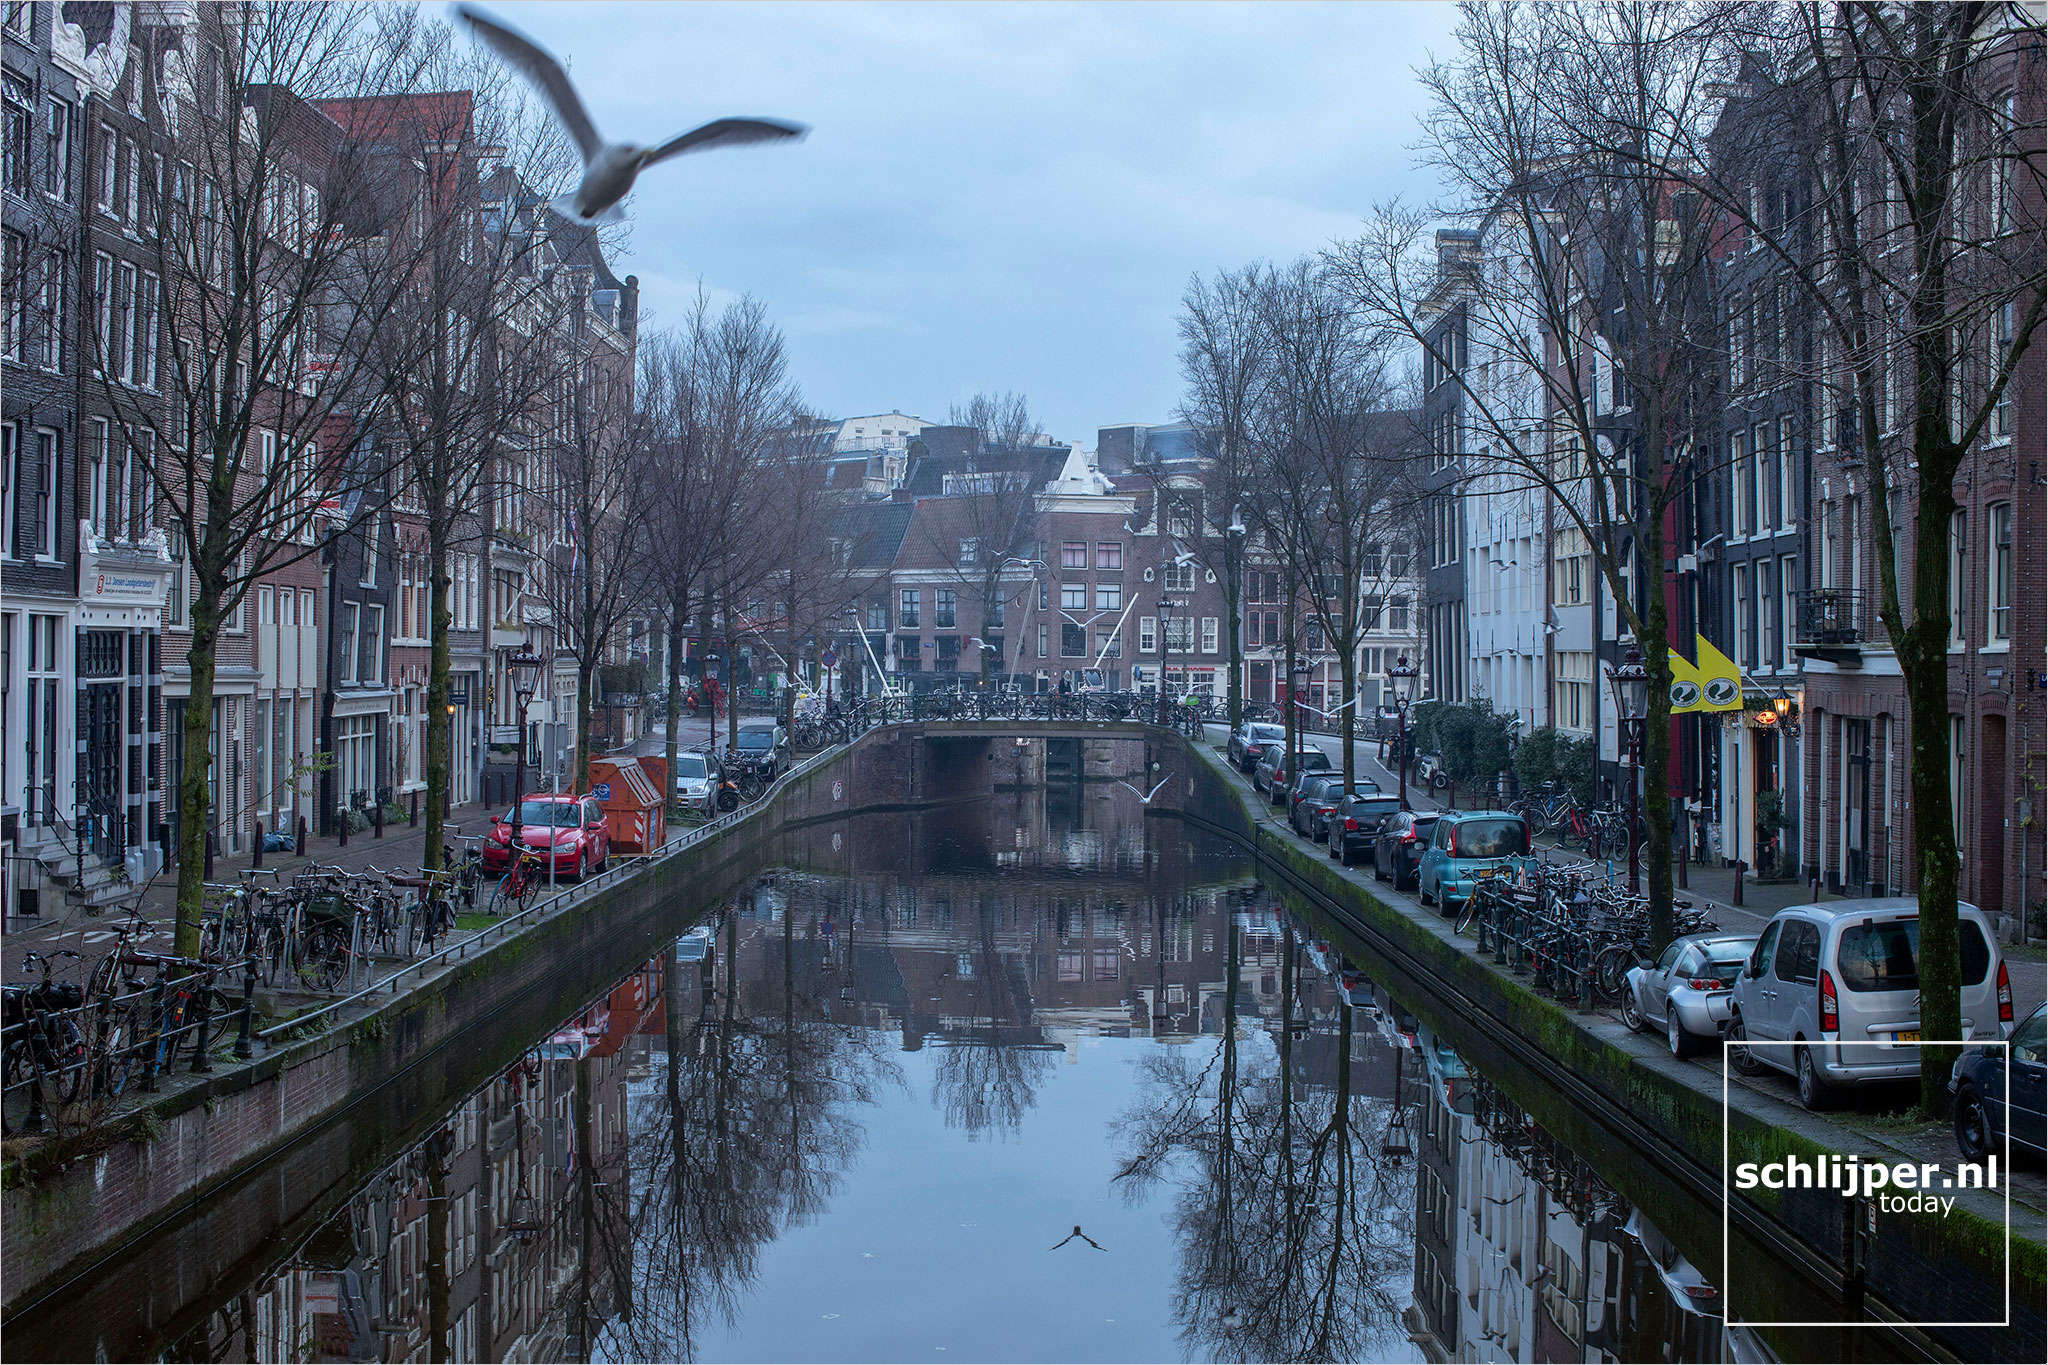 The Netherlands, Amsterdam, 1 januari 2021